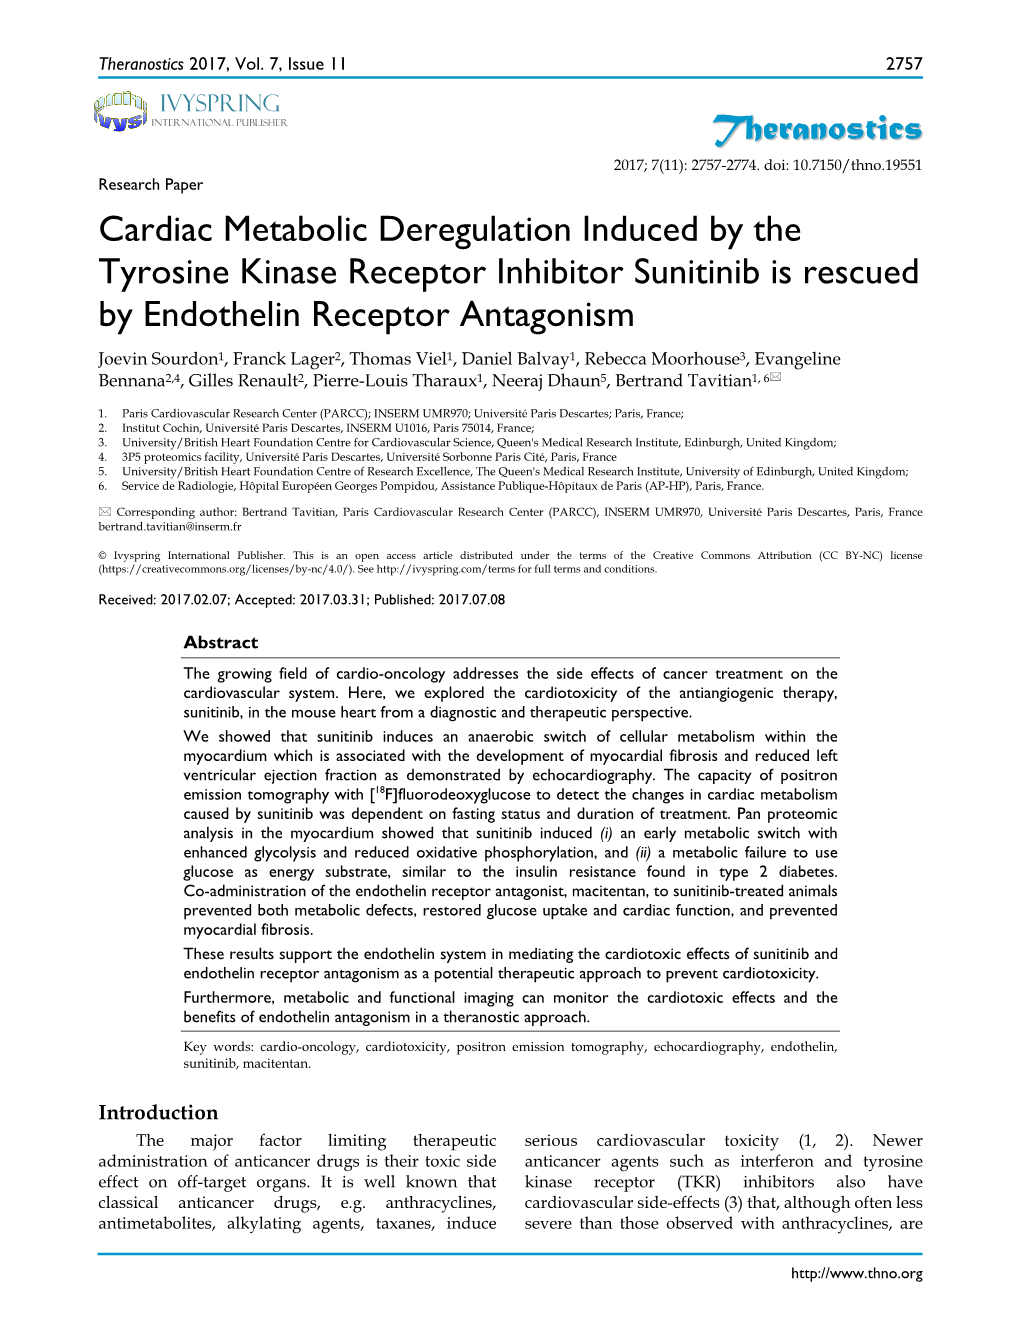 Theranostics Cardiac Metabolic Deregulation Induced by the Tyrosine Kinase Receptor Inhibitor Sunitinib Is Rescued by Endothelin